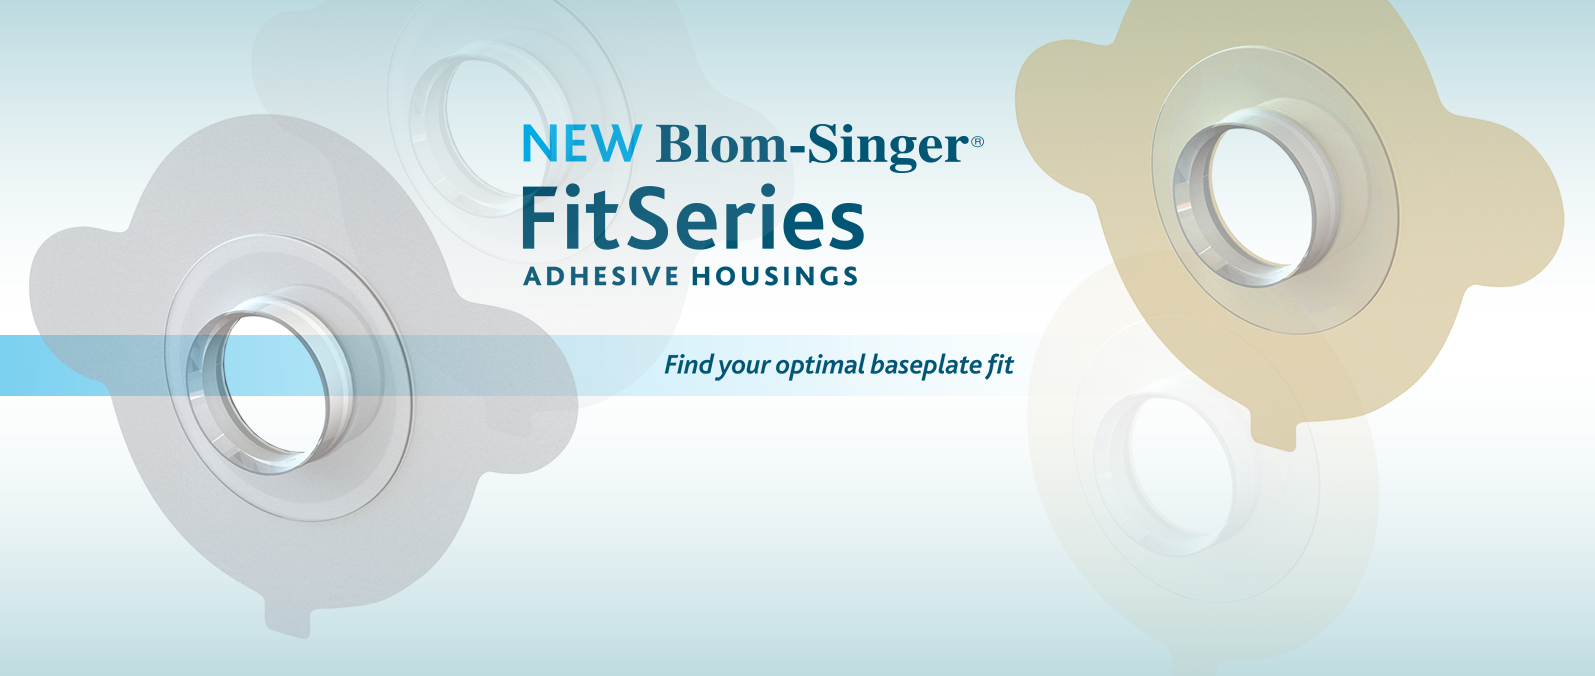 Blom-Singer FitSeries Adhesive Housings - find your optimal baseplate fit